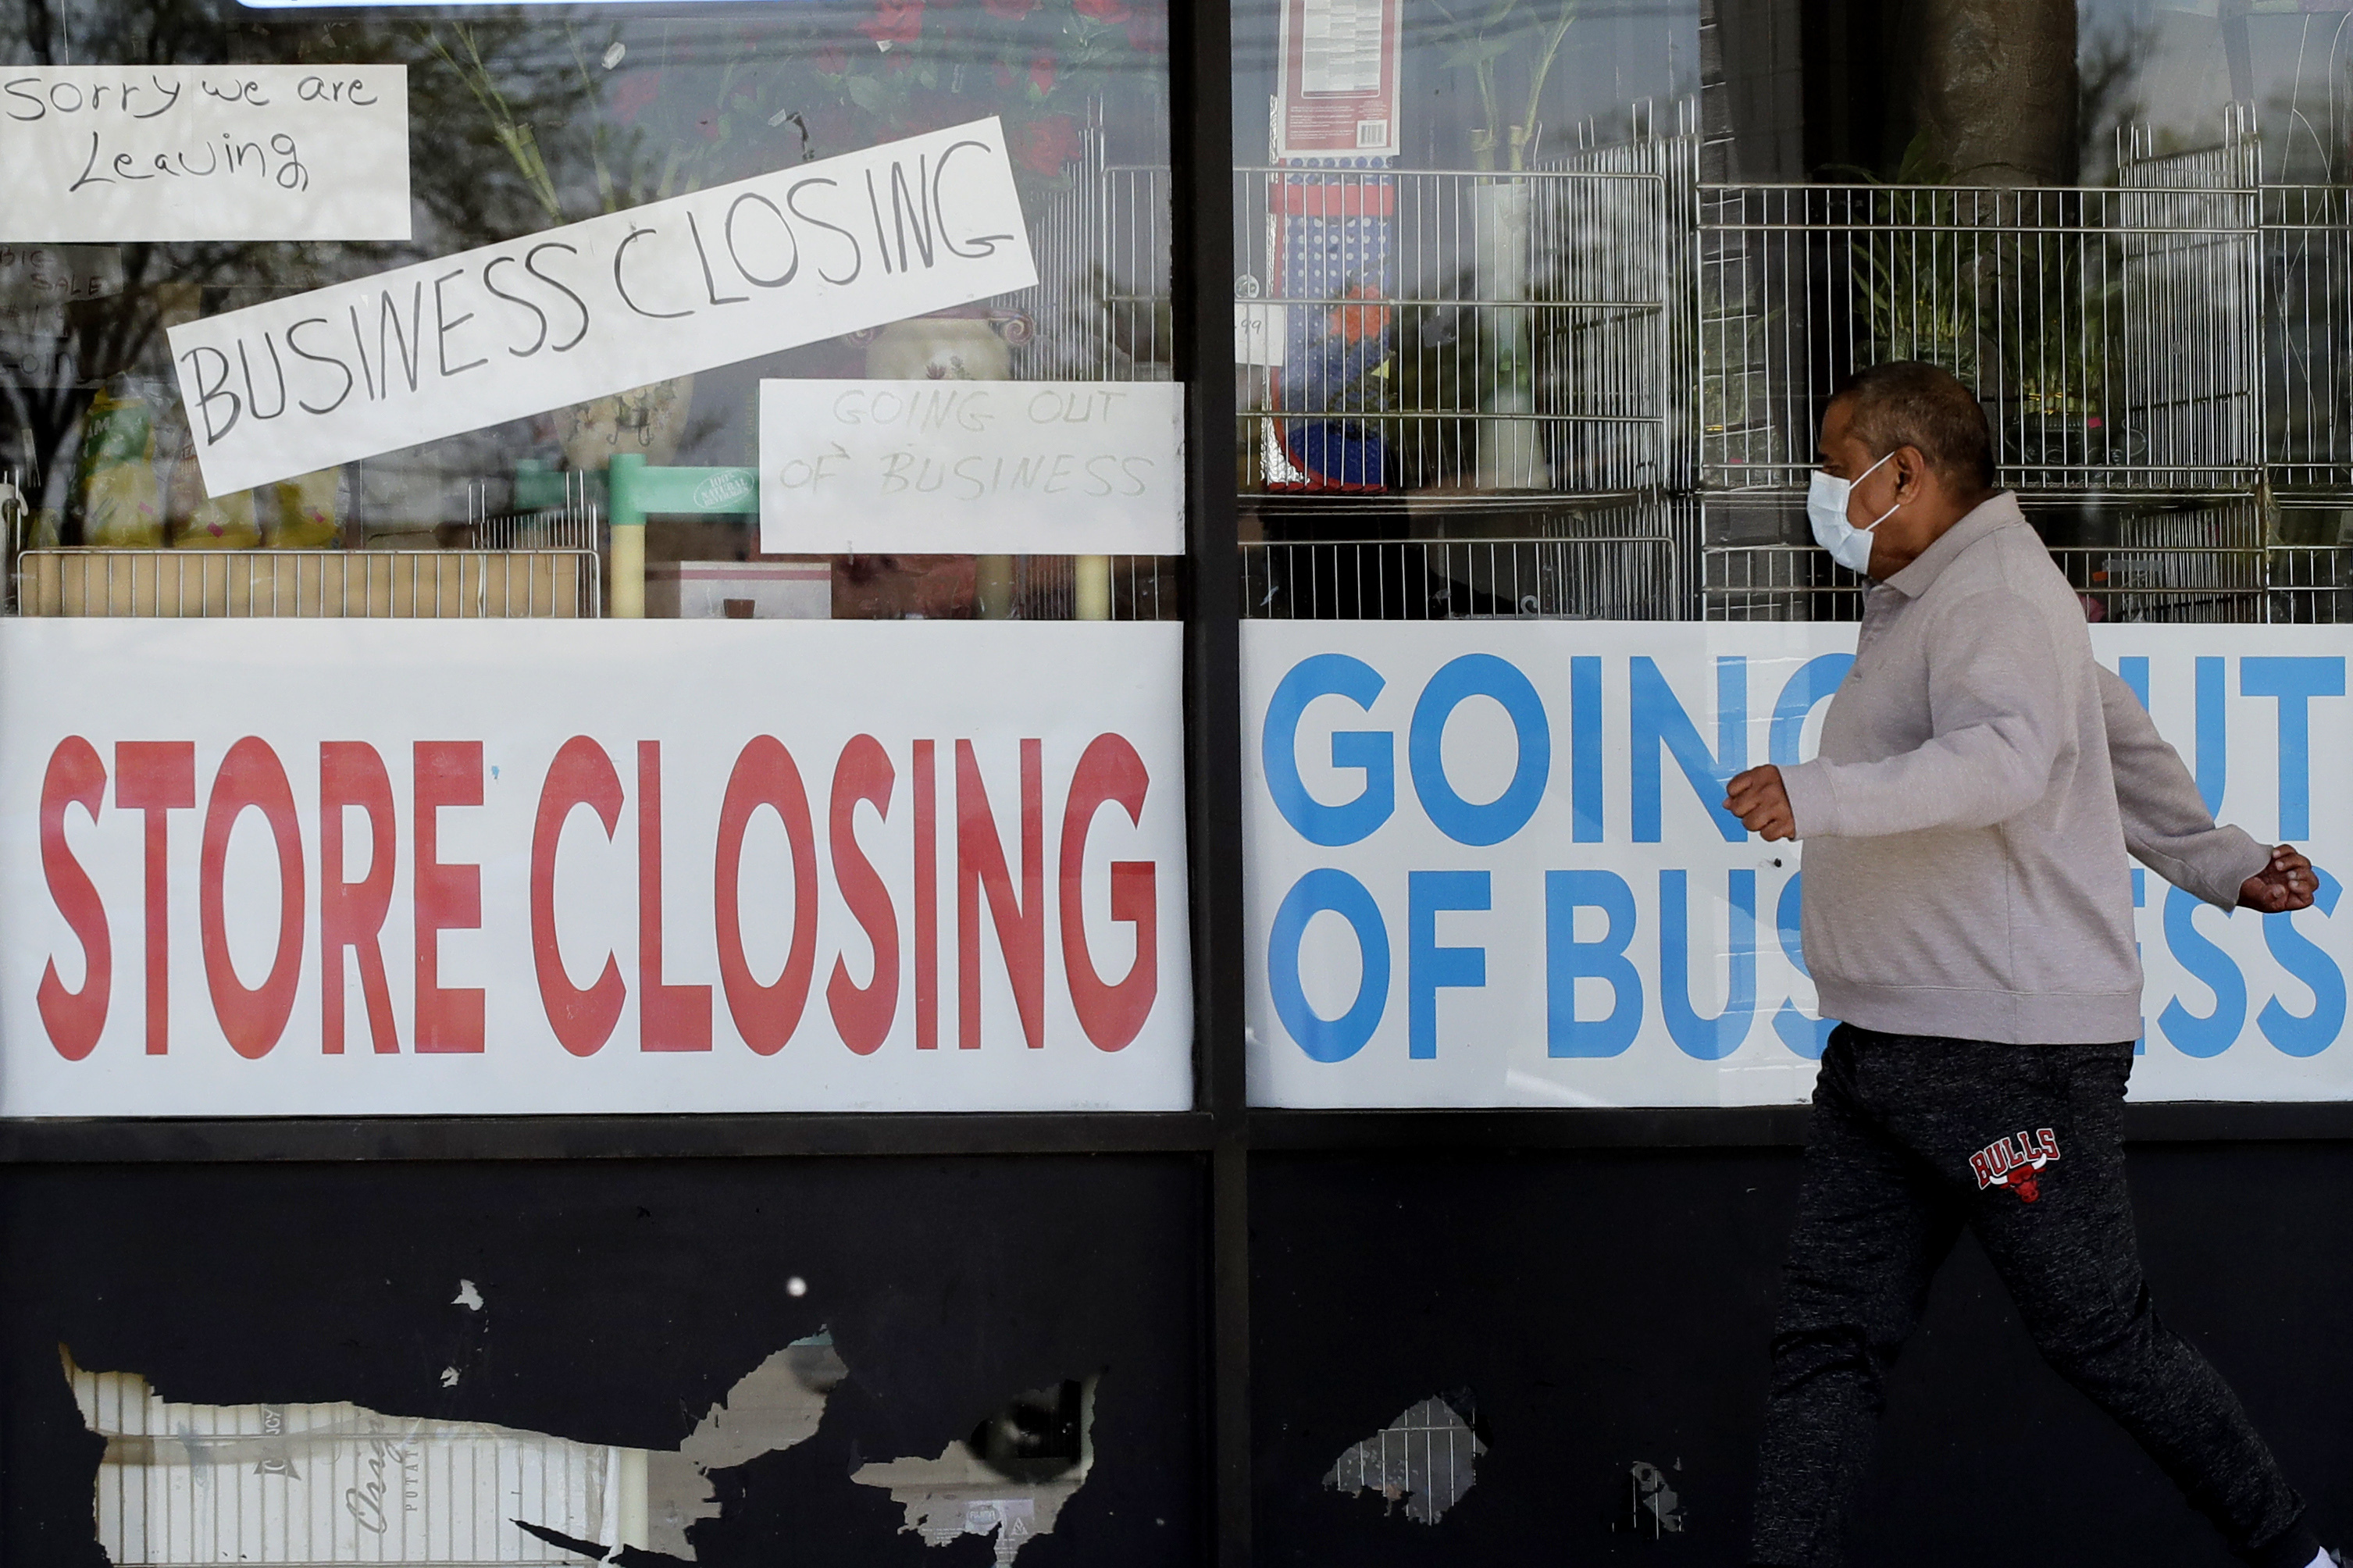 Business closure.